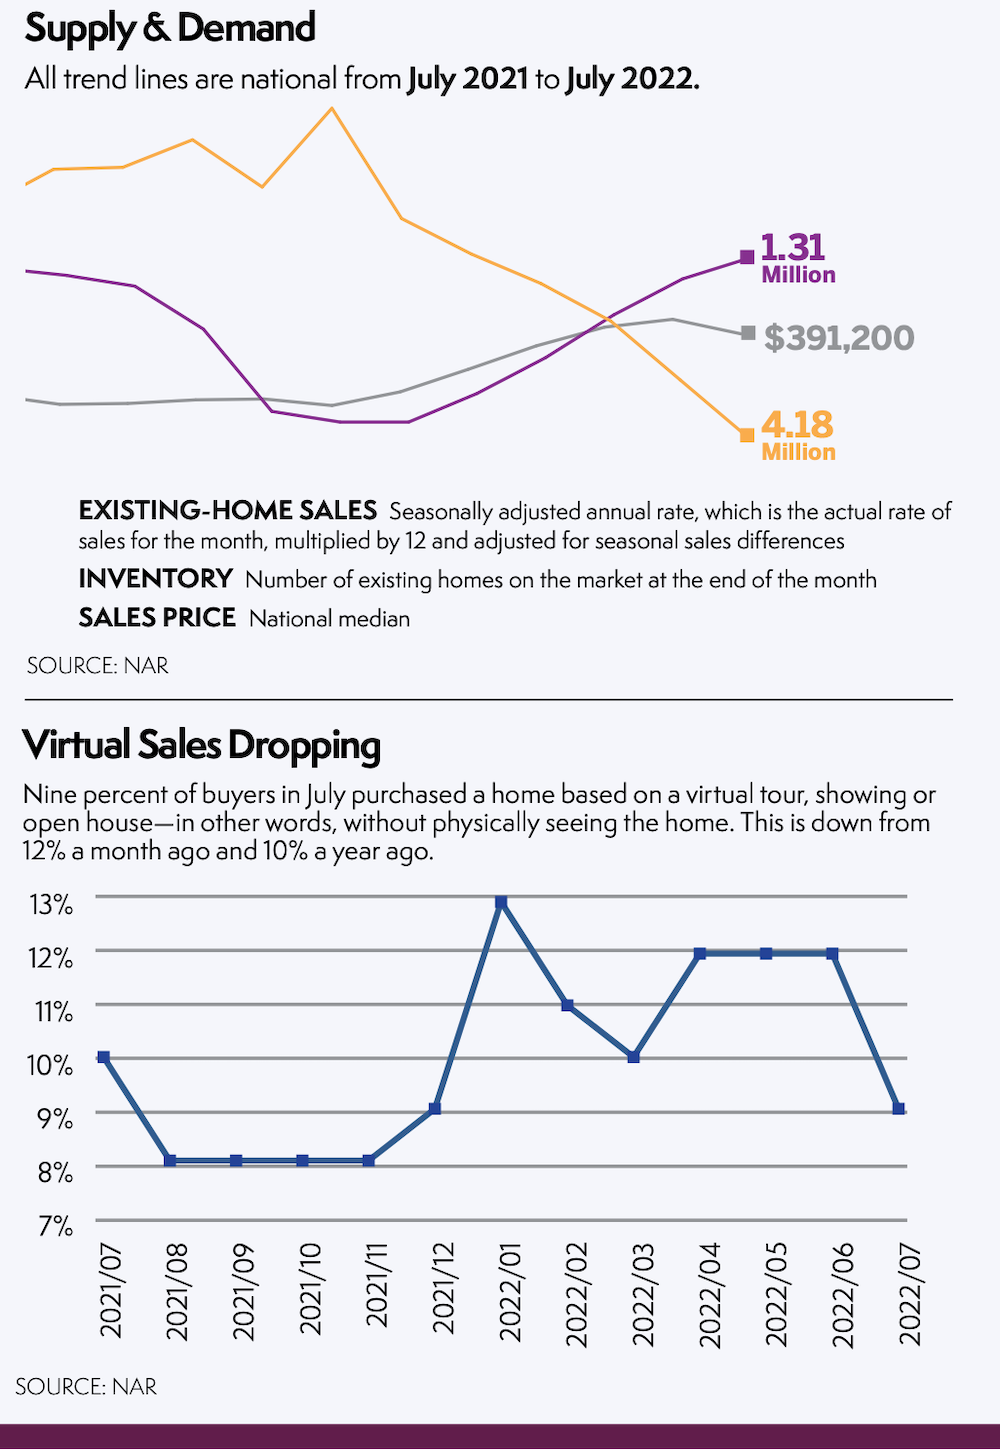 Supply & Demand and Virtual Sales Dropping